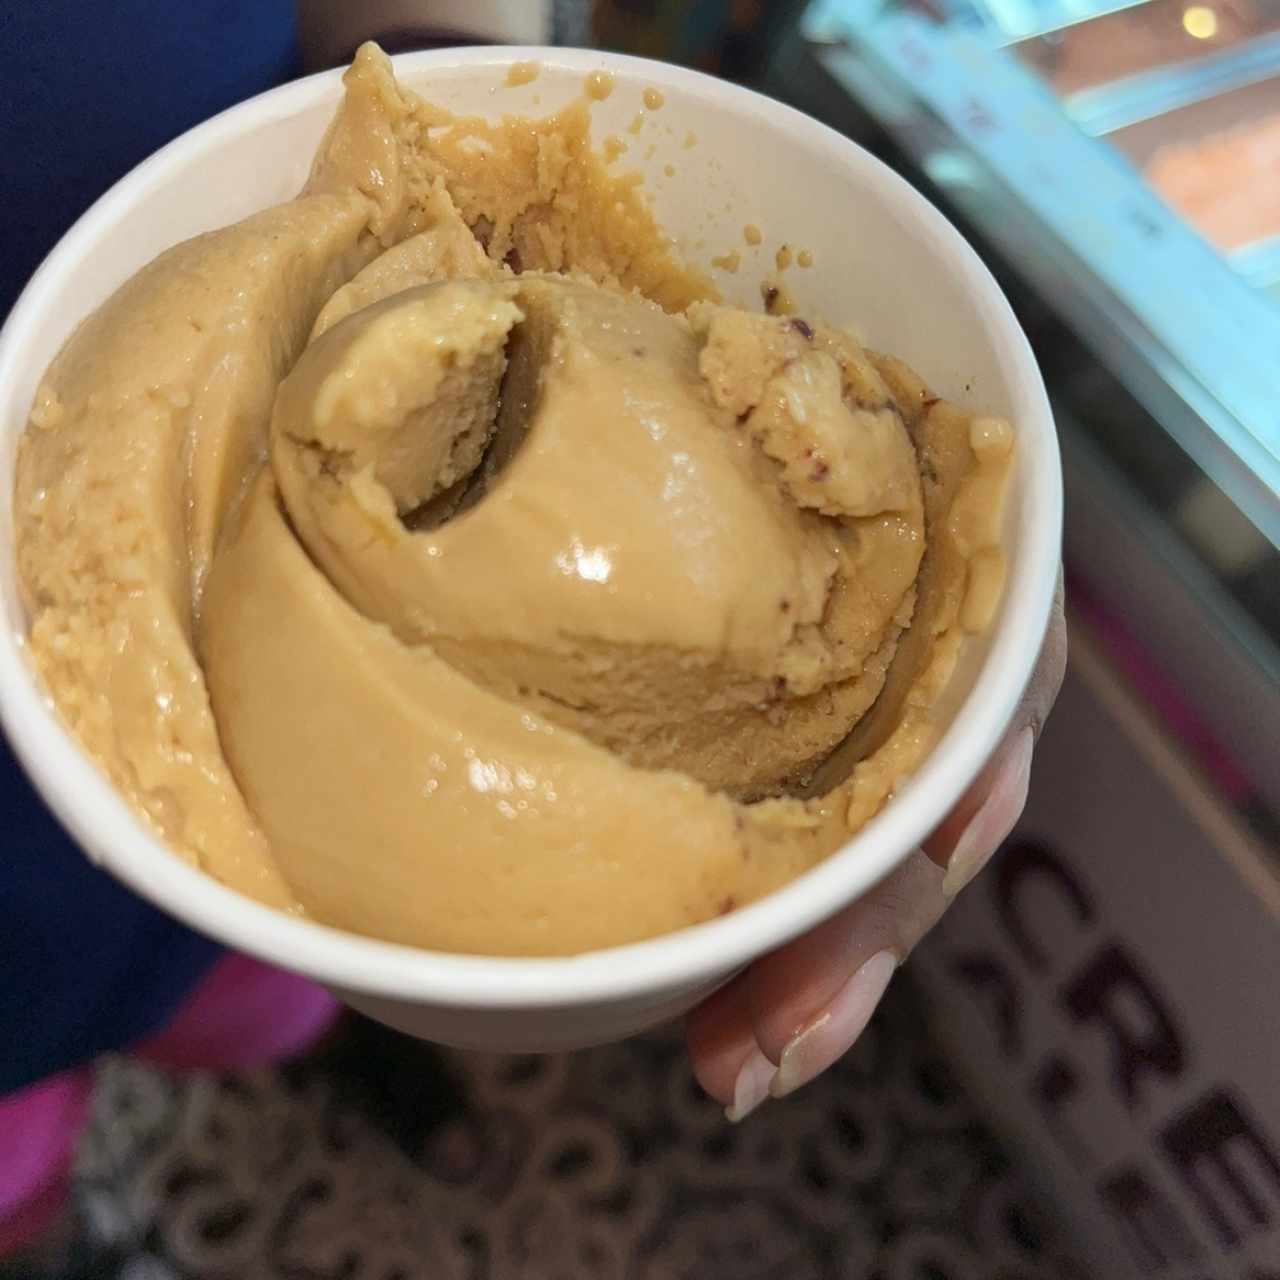 Copa de helado glutten free